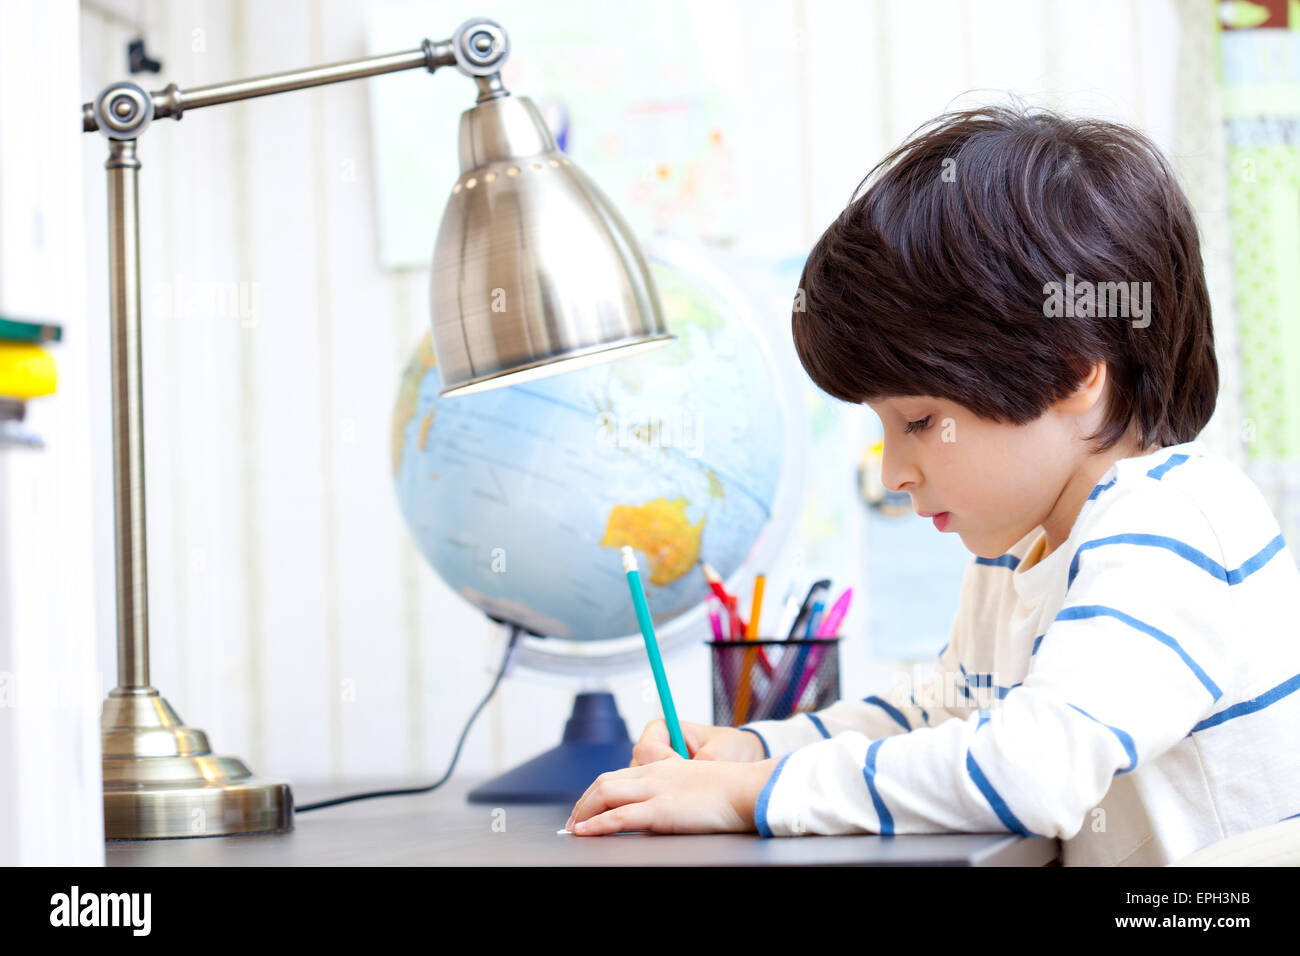 schoolchild doing homework Stock Photo